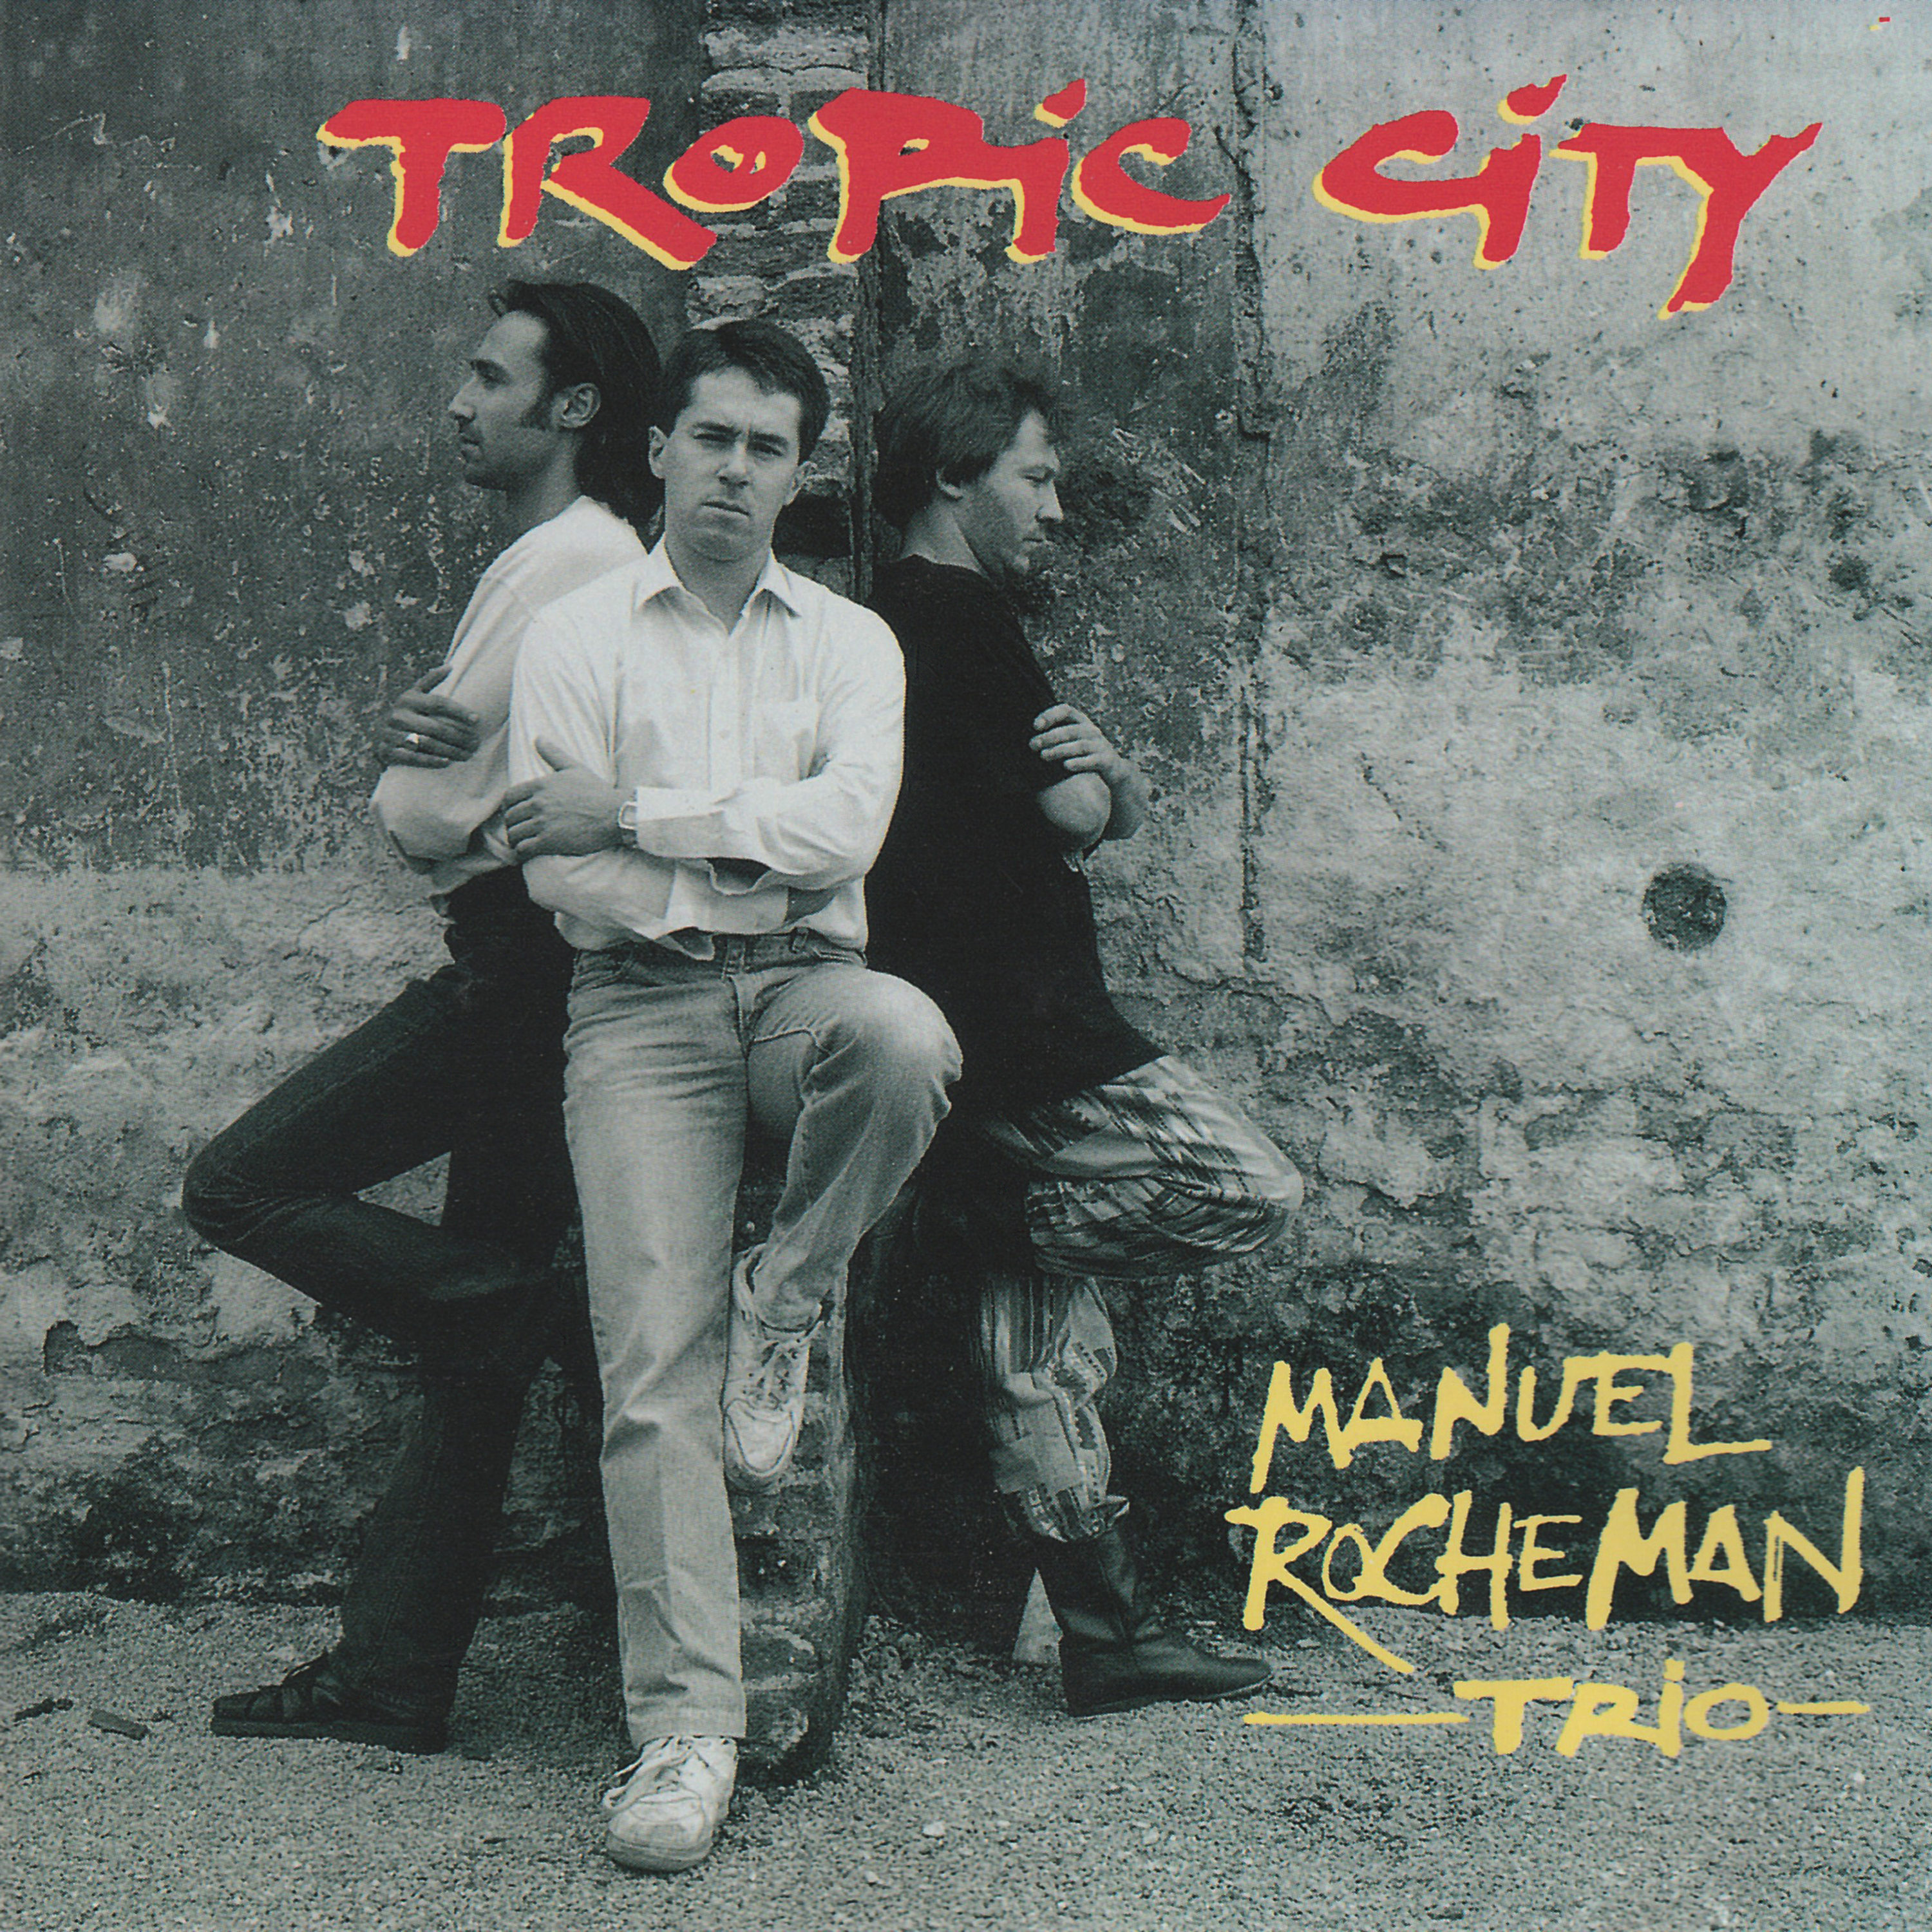 MANUEL ROCHEMAN - Tropic City cover 